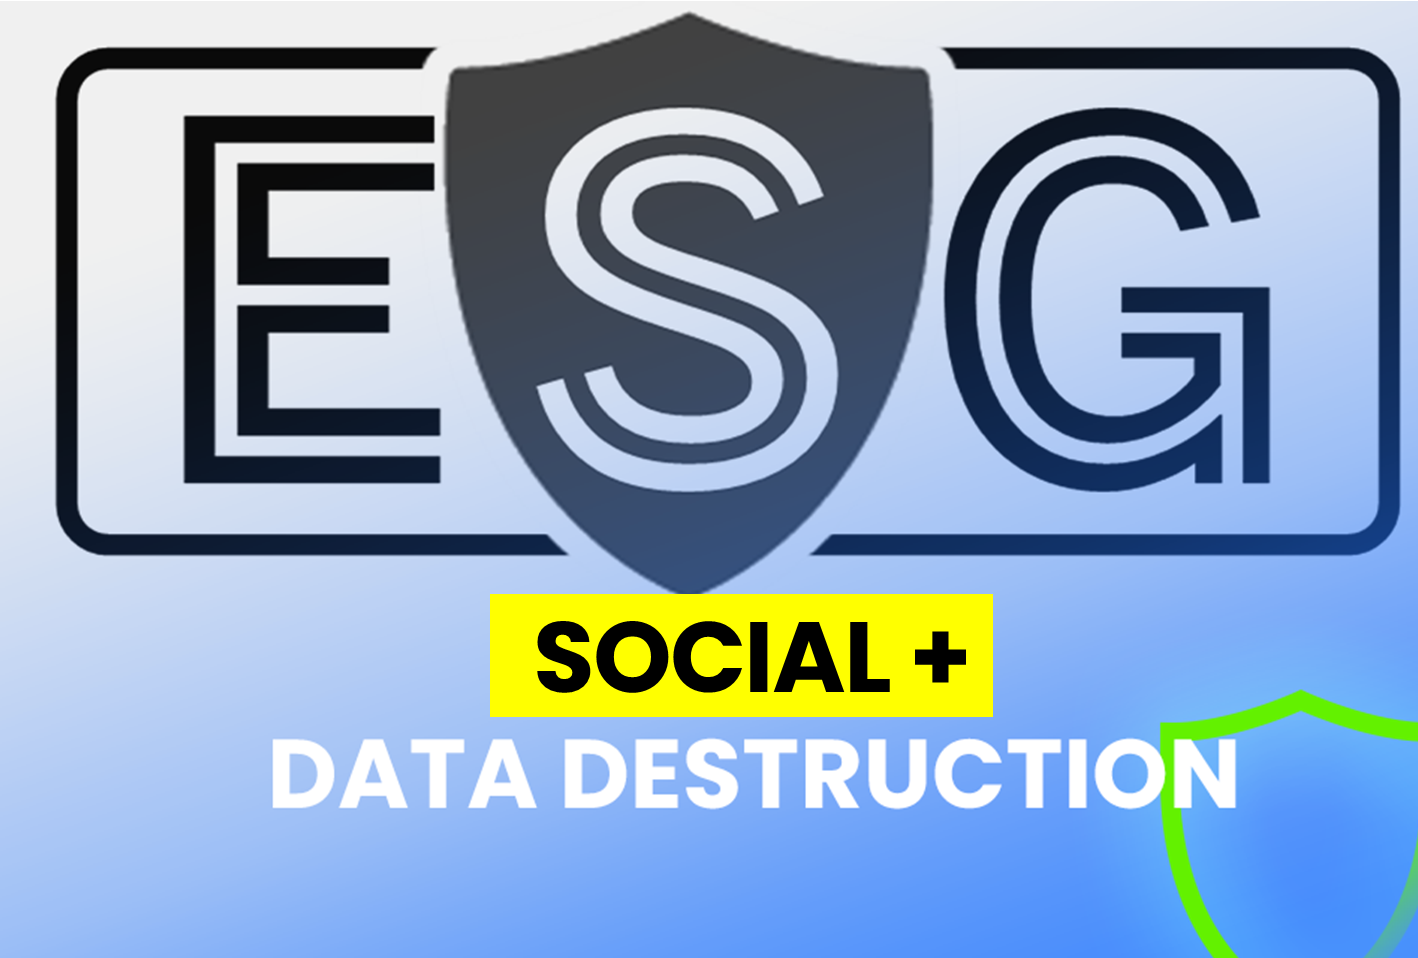 E-waste Data Destruction and ESG: Social Improves Outcomes